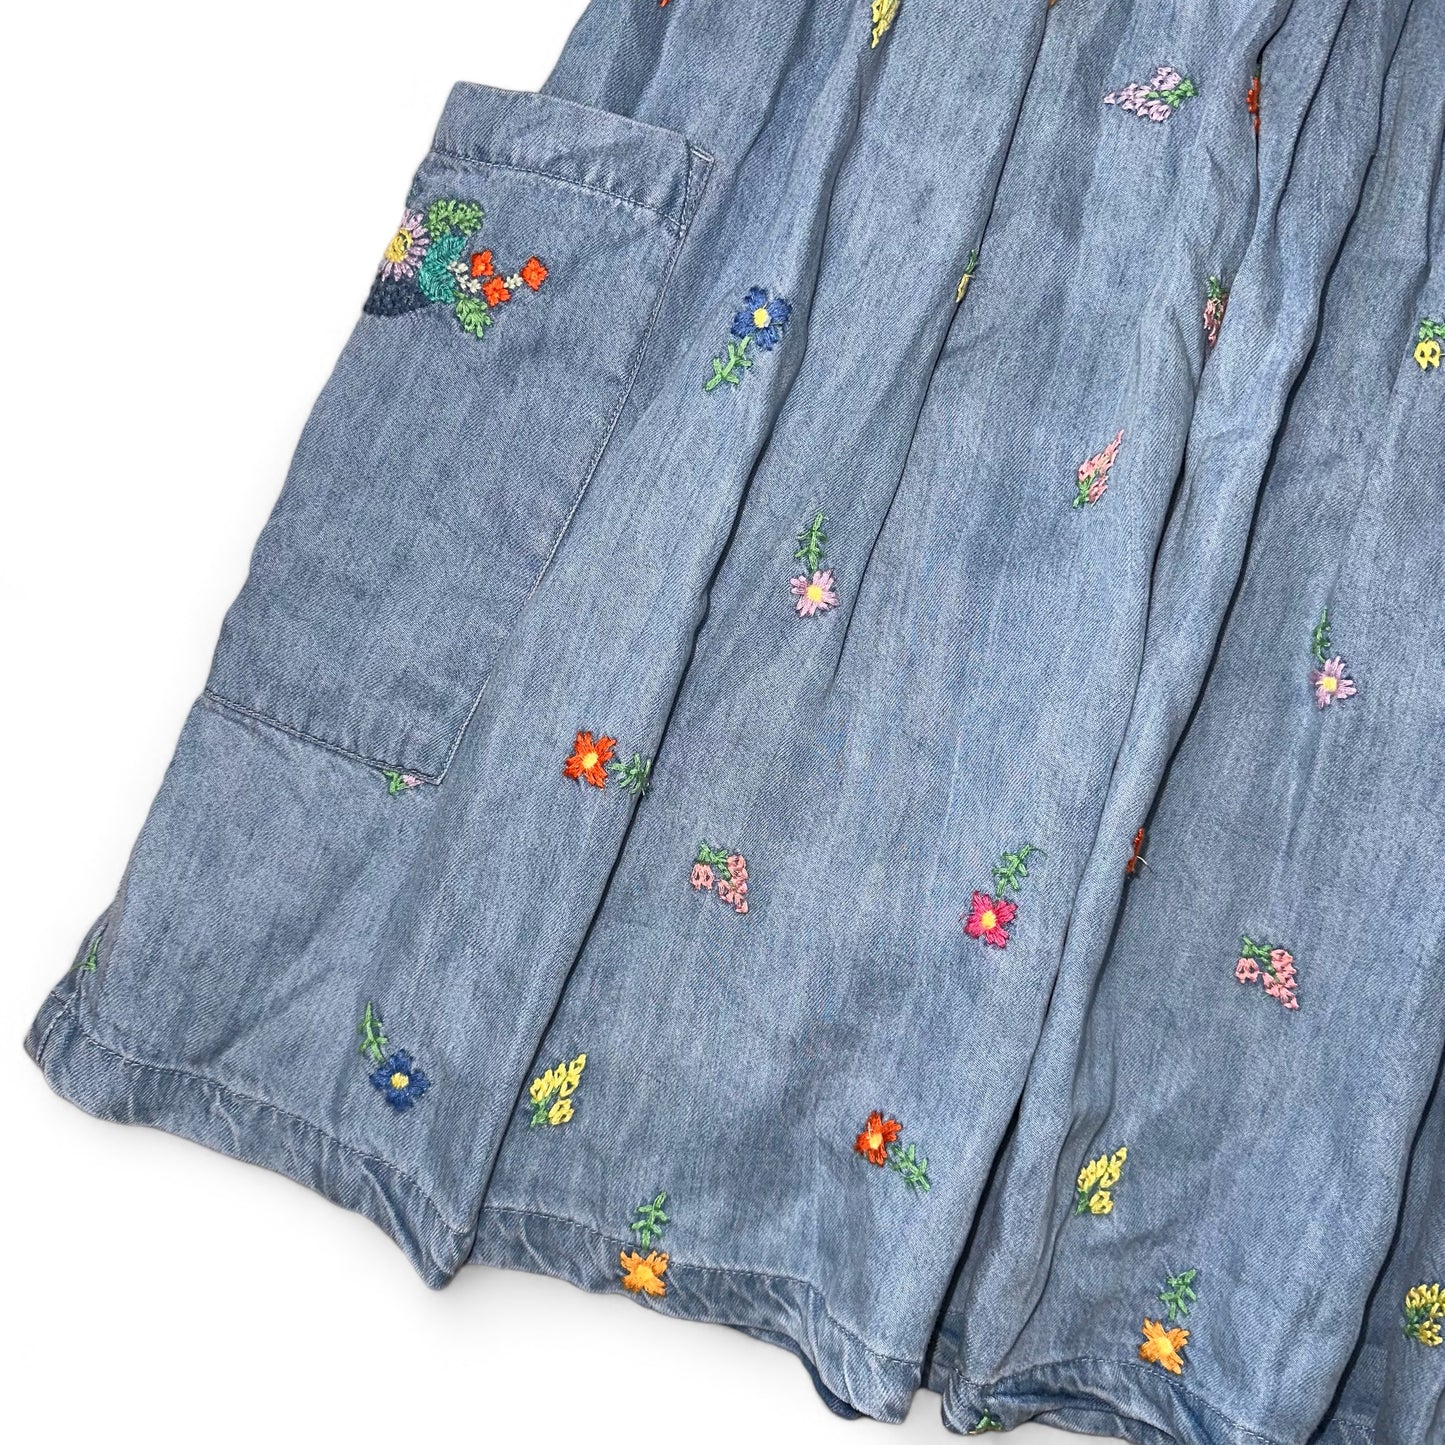 Stella McCartney Denim Embroidered Dress